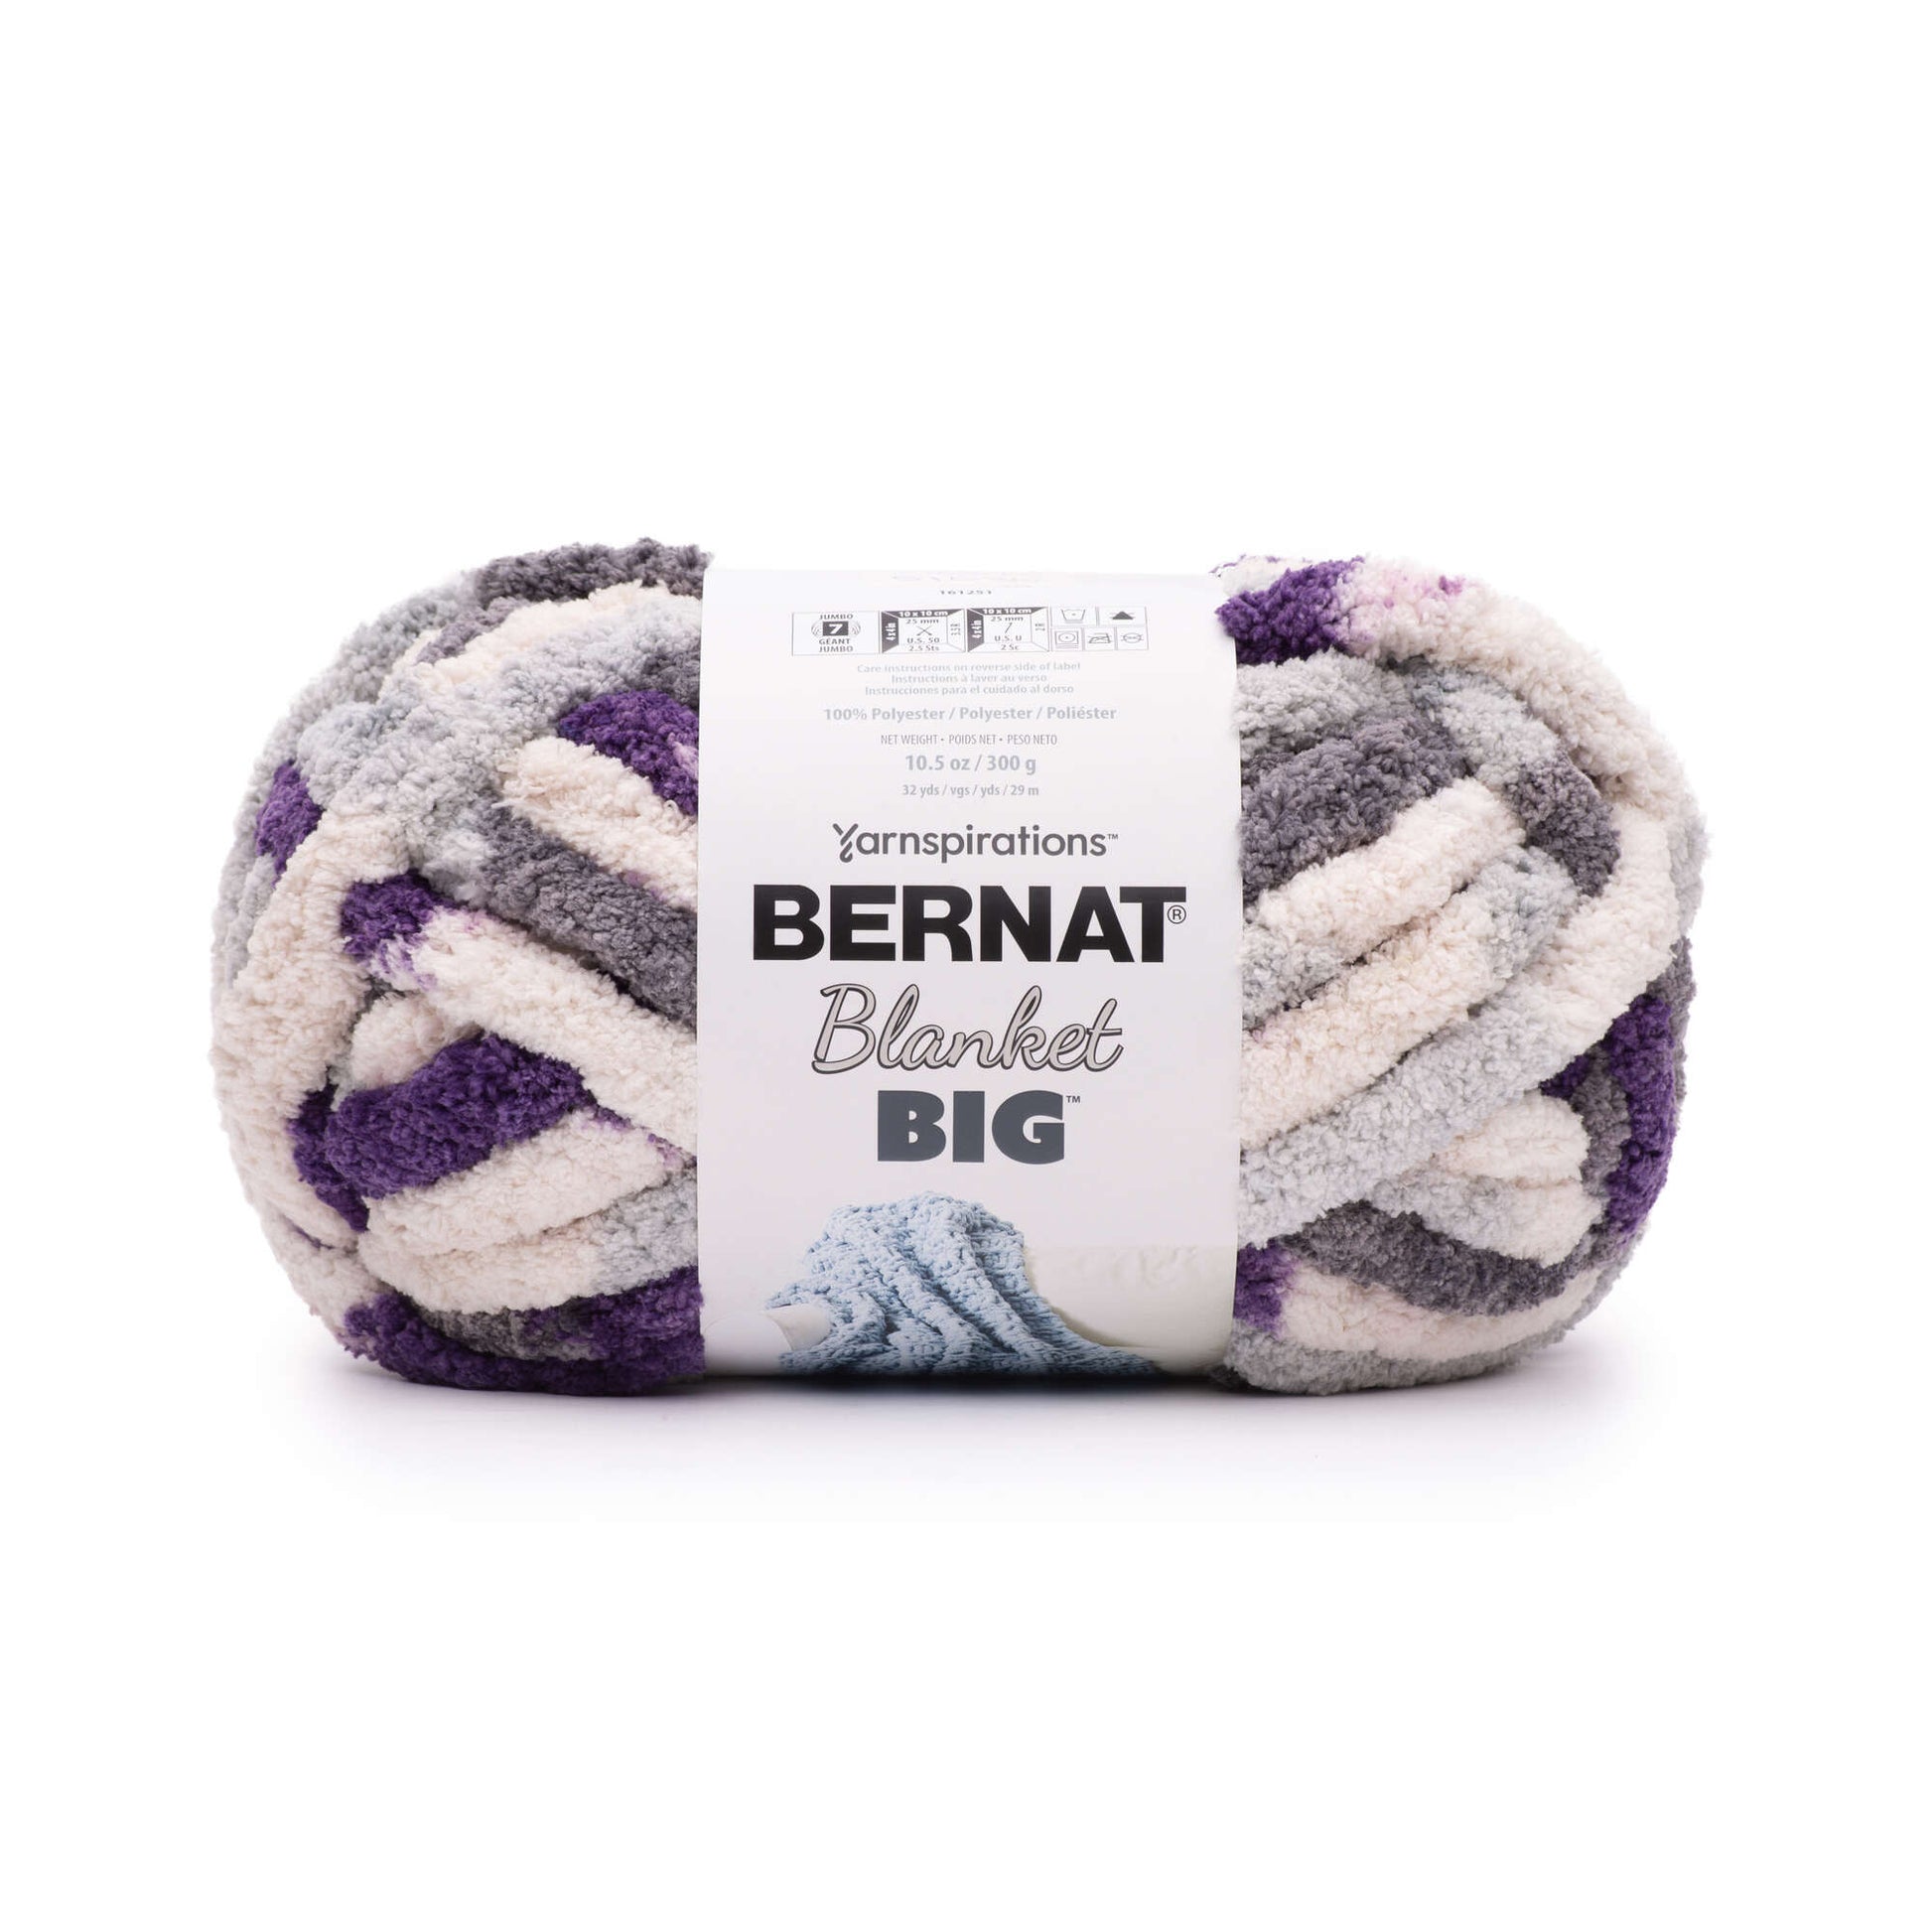 Bernat Blanket Big Yarn (300g/10.5oz) Plum Fest